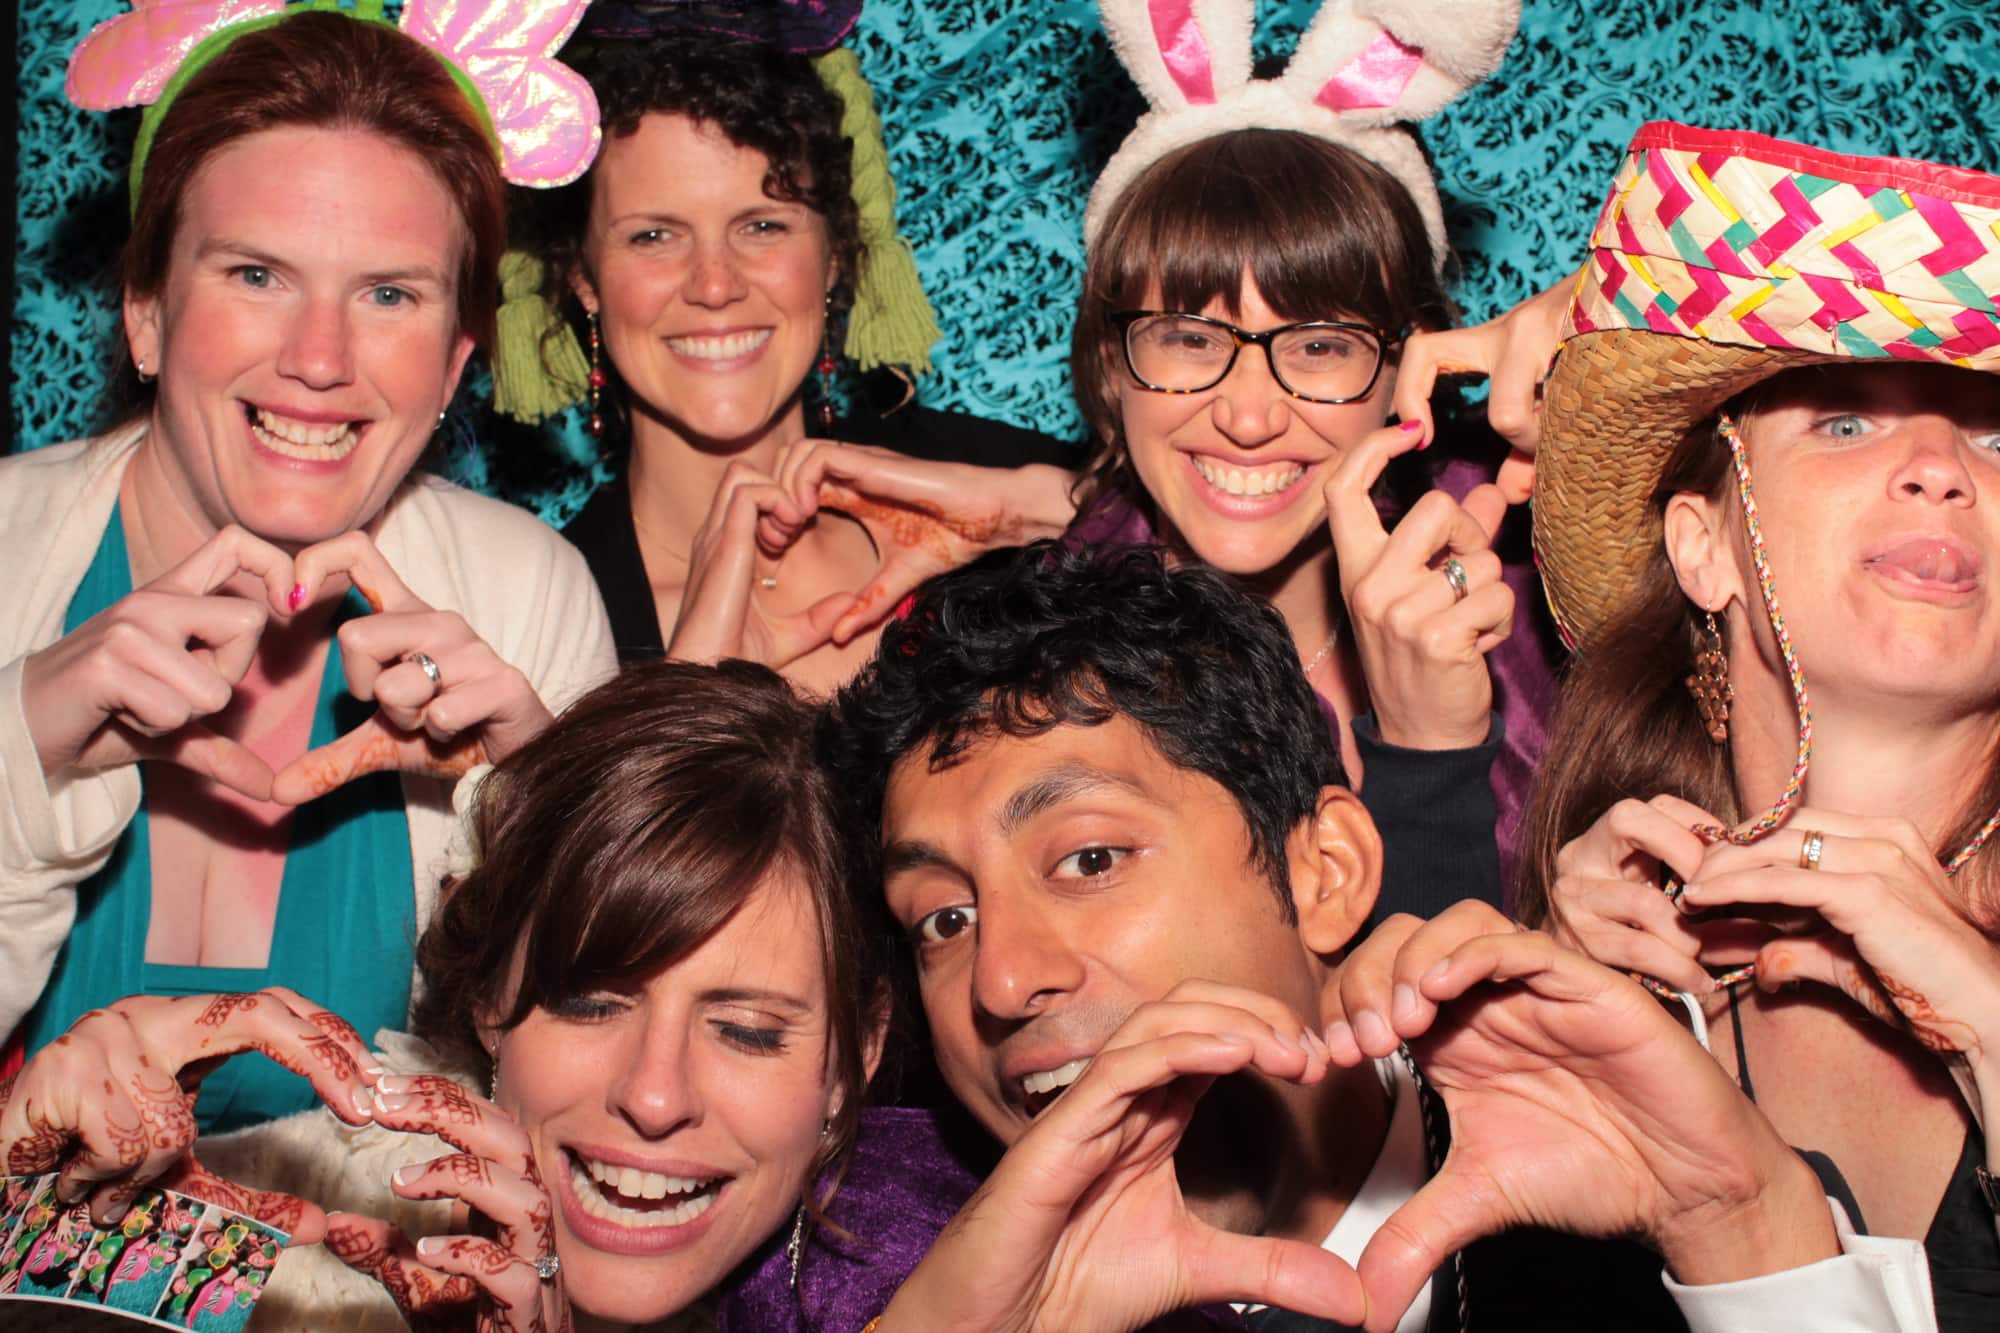 Photo Booth-Rental-Hindu-Indian-Austin-Kyle-Wedding-Reception-Party-No. 1-Best-Props-Fun-Memories